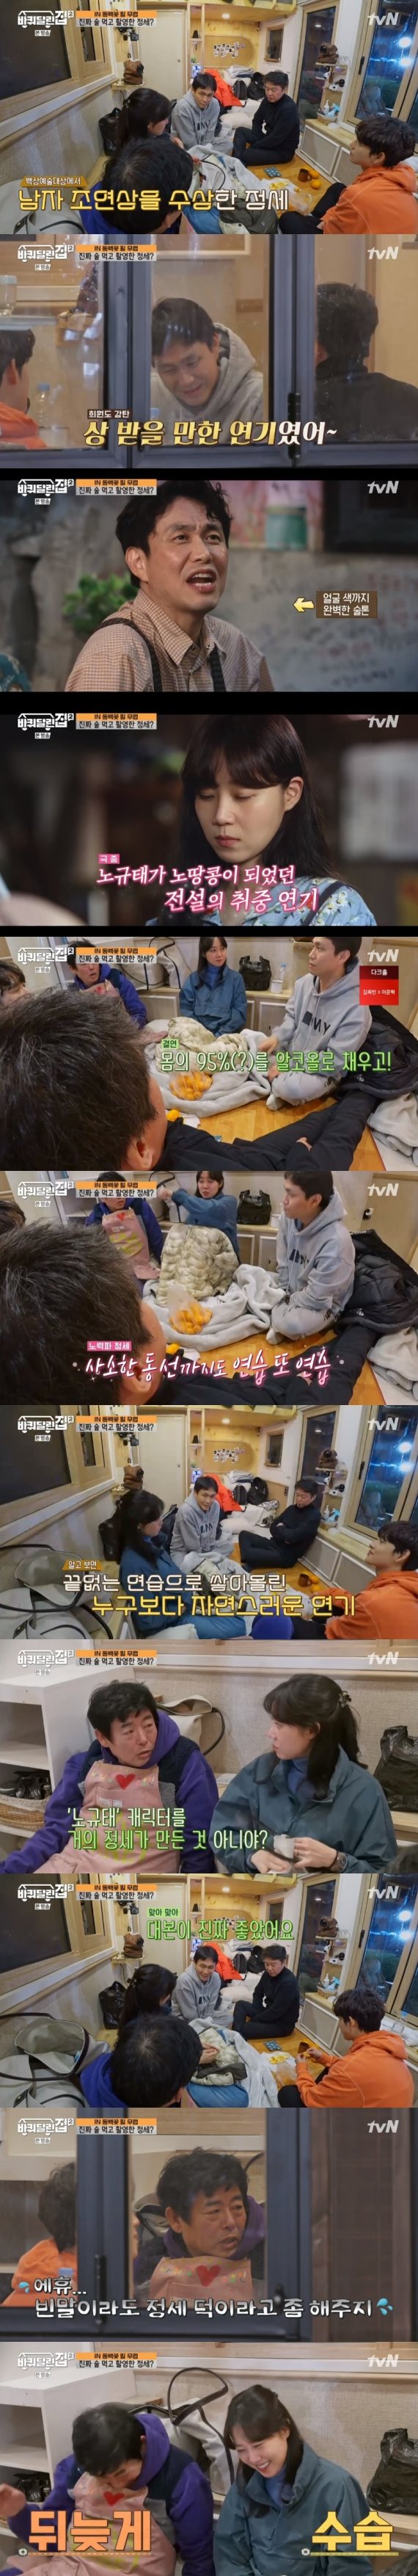 tvN '바퀴 달린 집2' 캡처 © 뉴스1